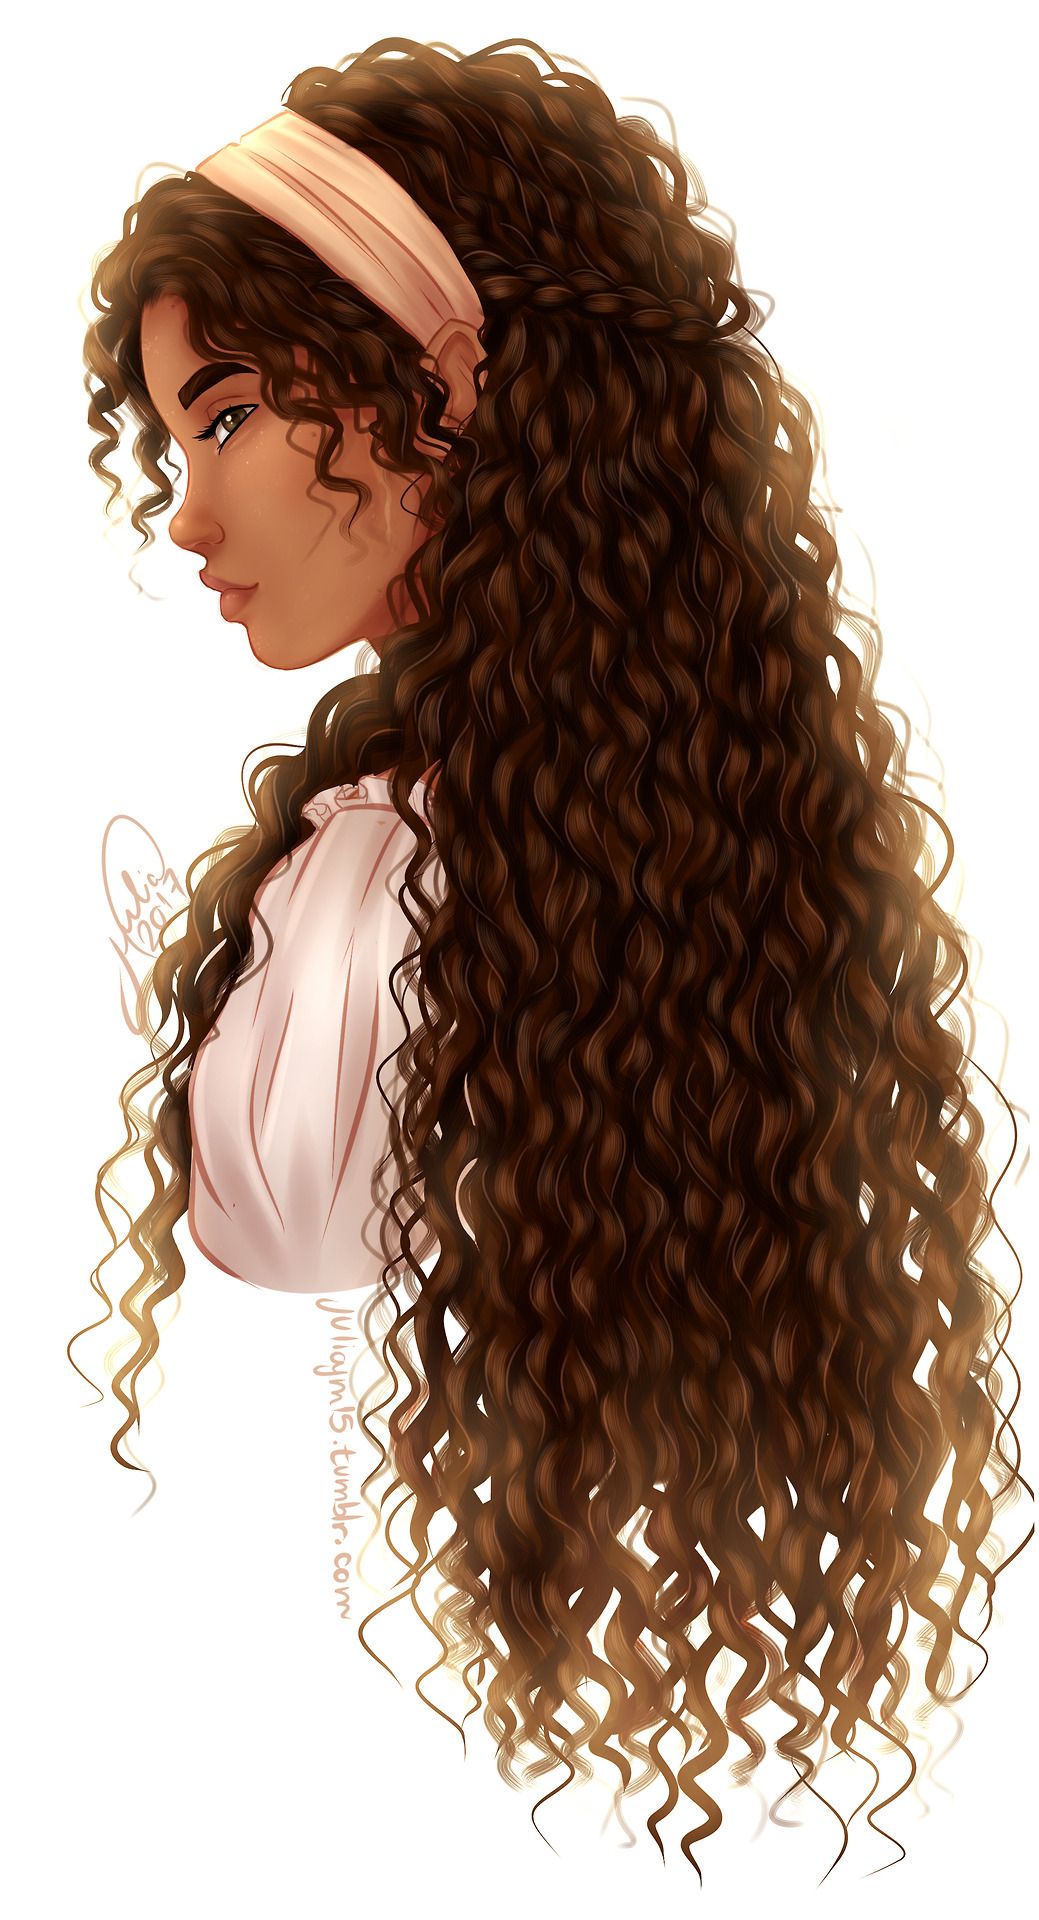 juliajm15.tumblr.com. Curly girl hairstyles, Curly hair drawing, Hair illustration